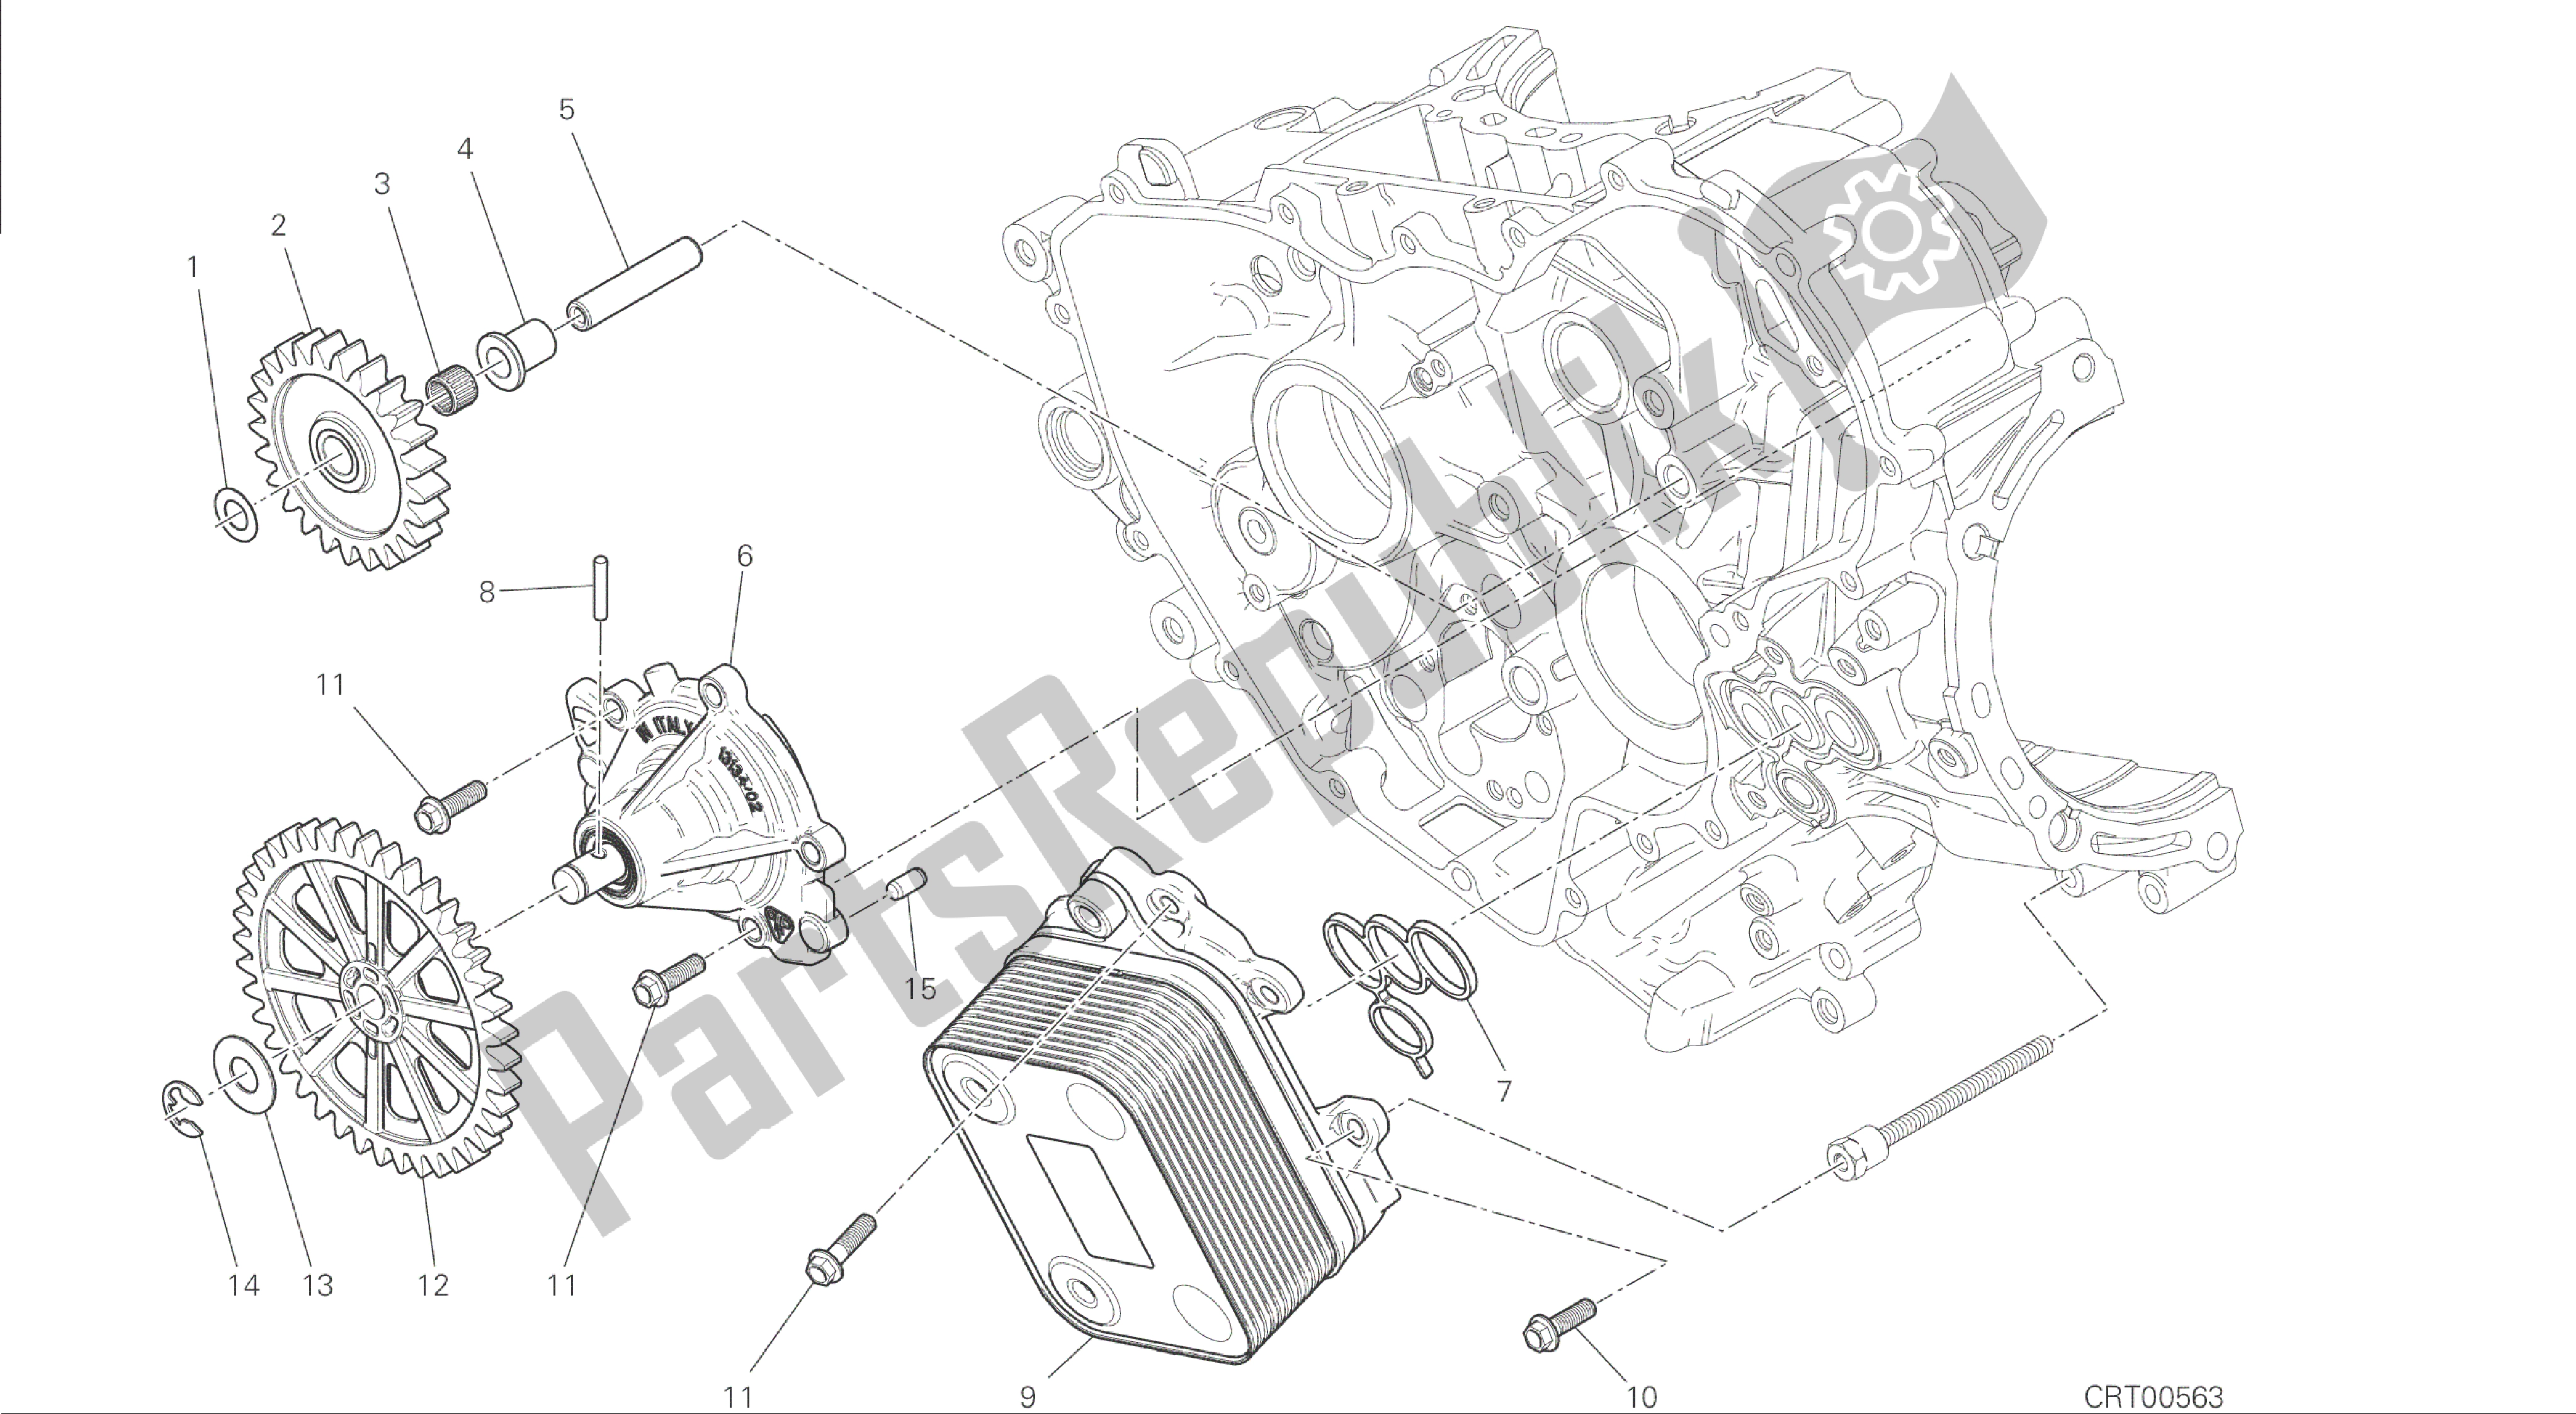 Alle onderdelen voor de Tekening 011 - Pompa Acqua [mod: 1199 Abs; Xst: Aus, Bra, Chn, Eur, Fra, Jap] Group Engine van de Ducati Panigale ABS 1199 2014